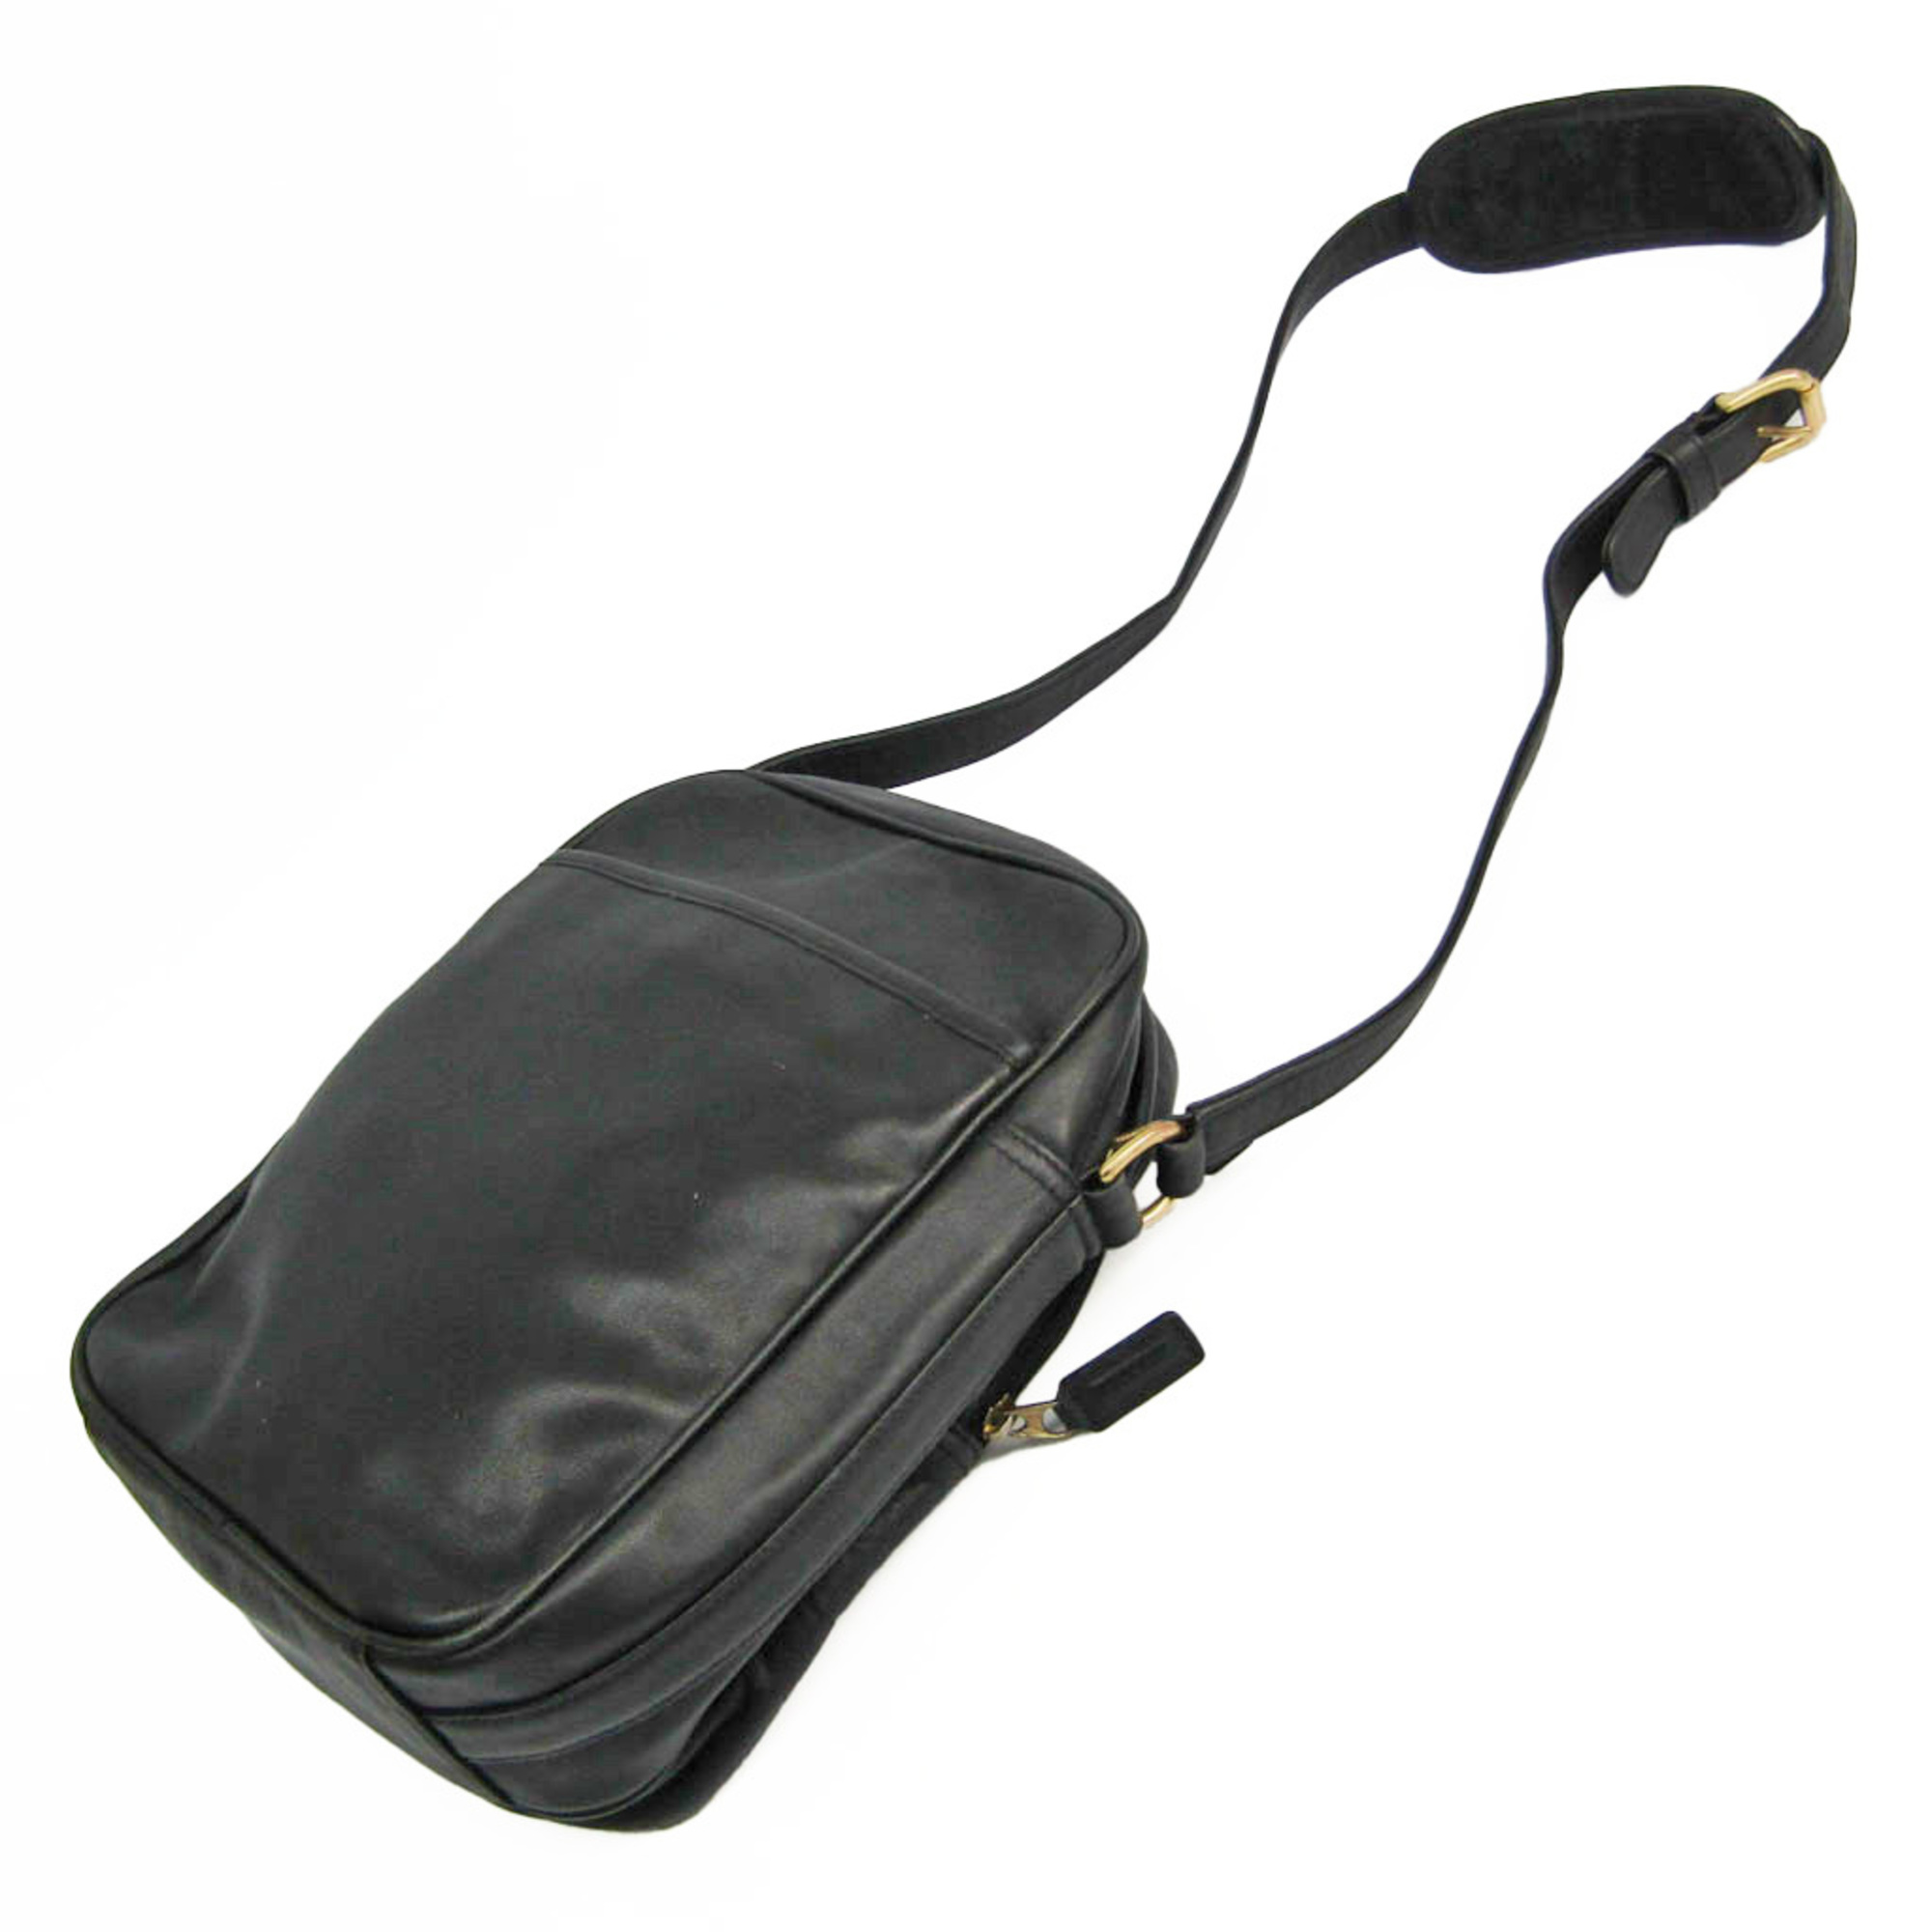 Coach 0593 Women's Leather Shoulder Bag Black